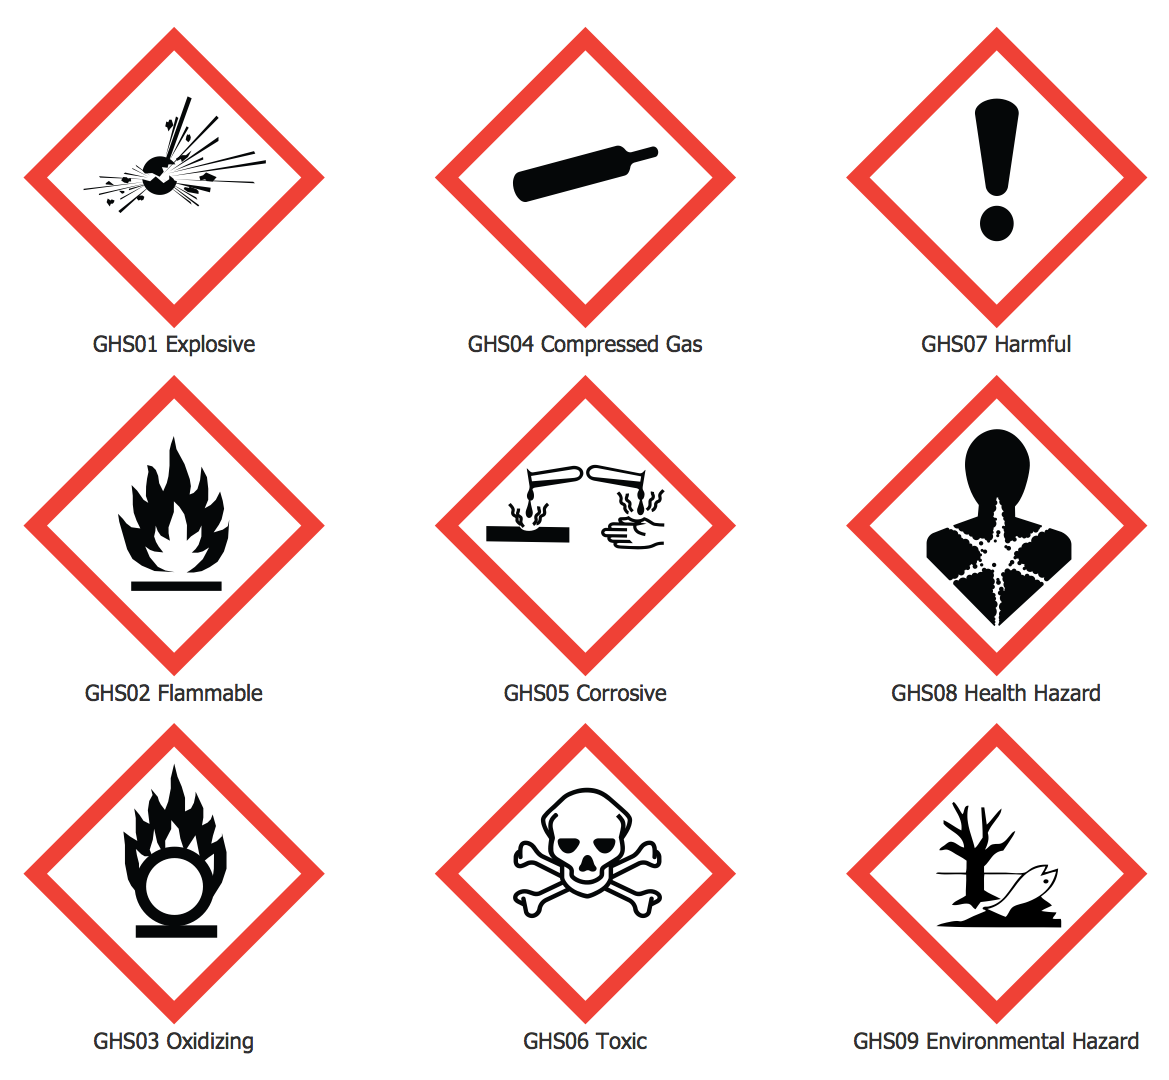 chemical hazard symbols